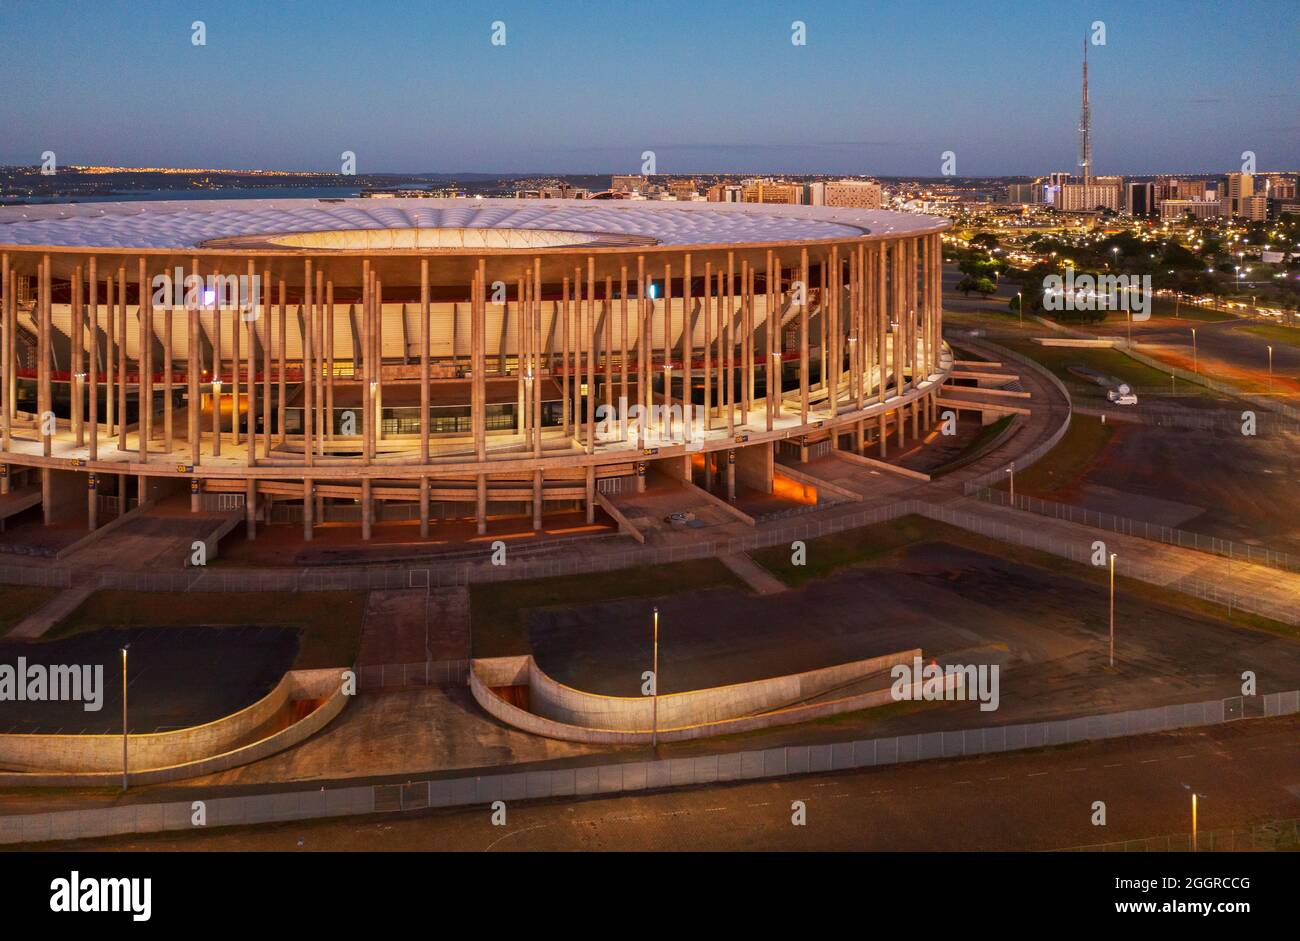 Estádio Nacional Mané Garrincha, uno stadio di calcio, Brasilia, Brasile  Foto stock - Alamy